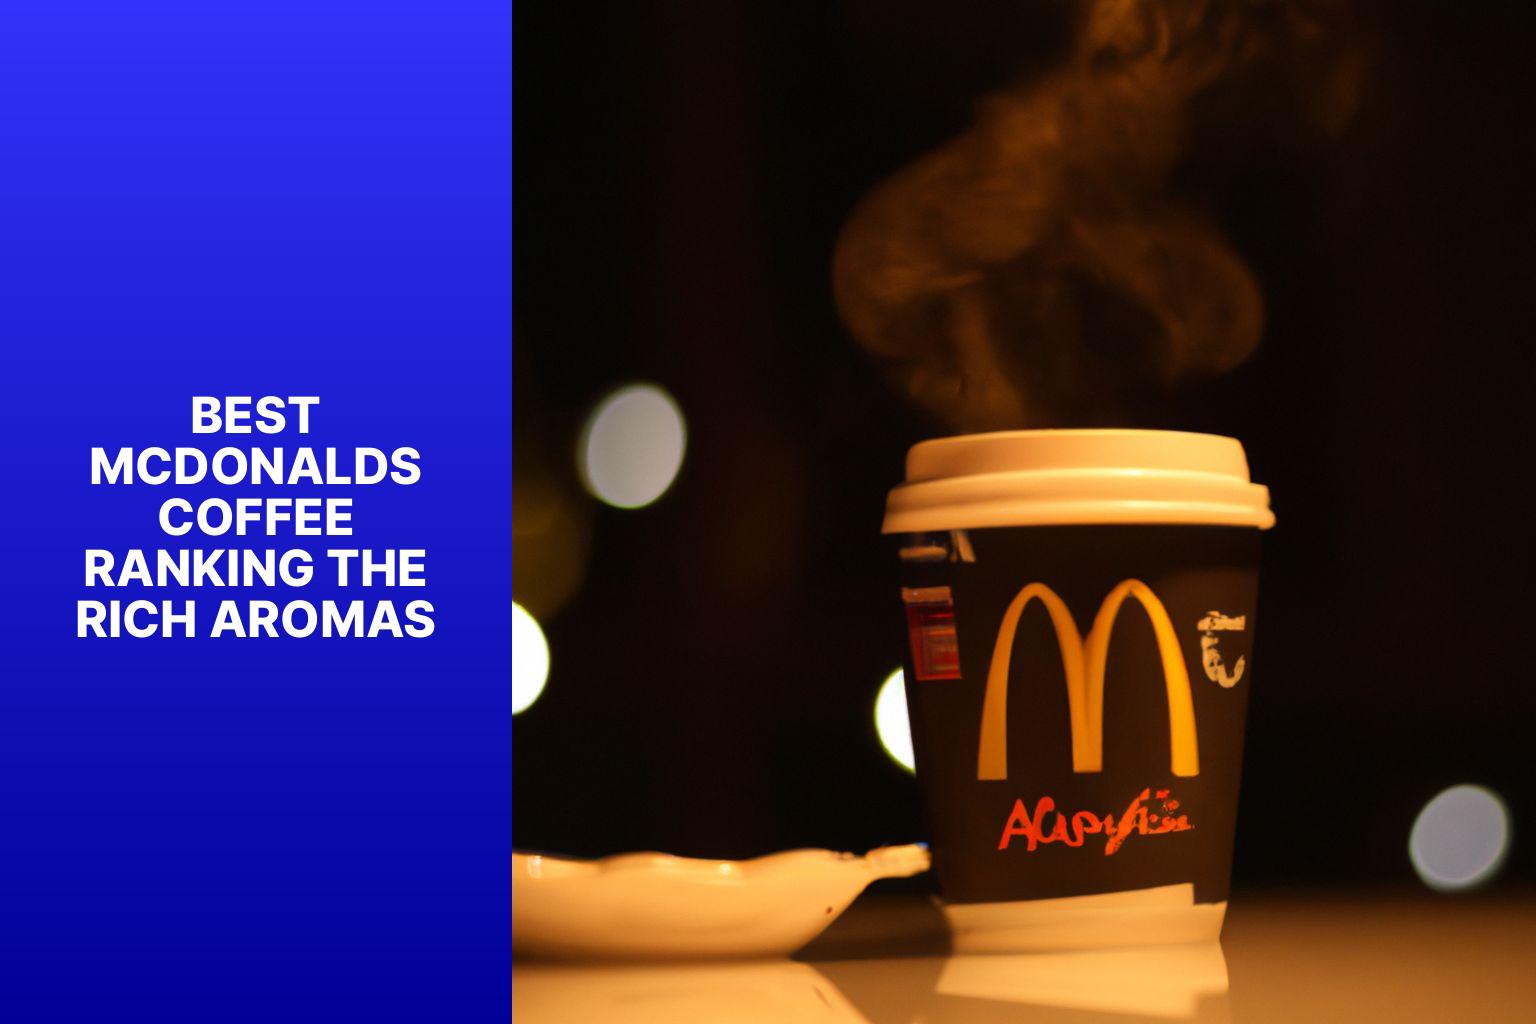 Best McDonald’s Coffee: Ranking the Rich Aromas